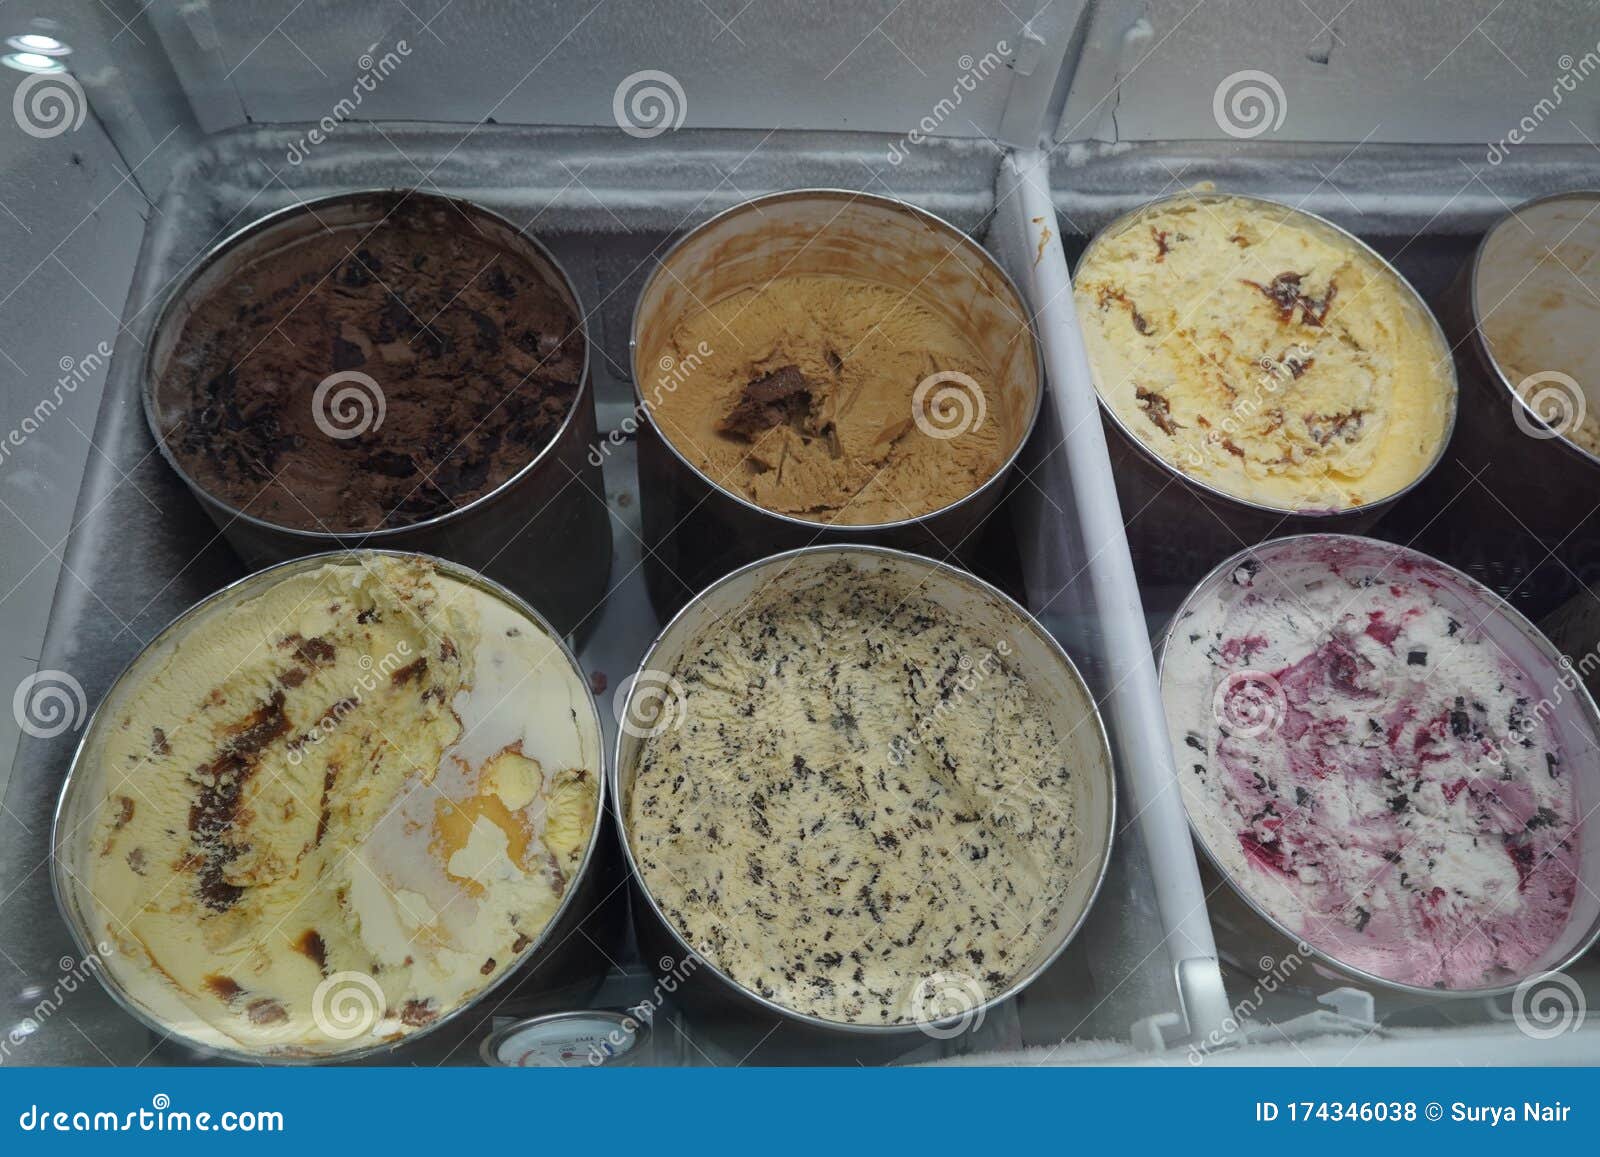 Ice Cream Tub  The Container Store